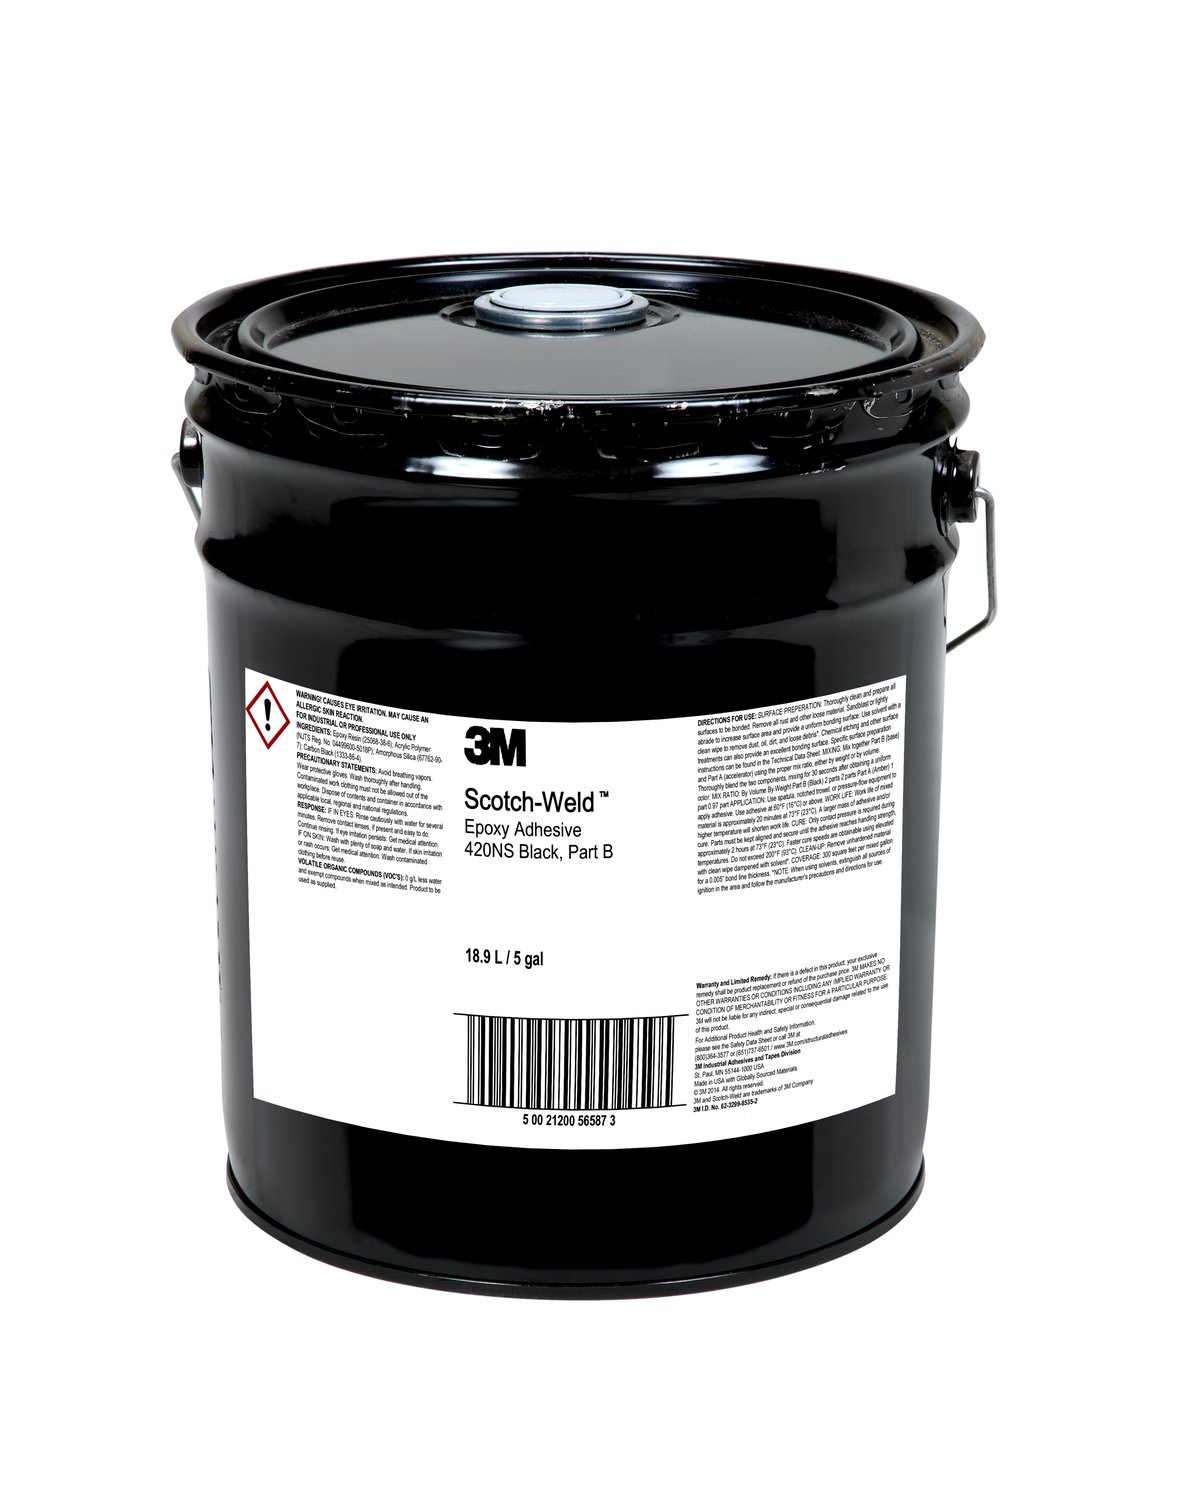 7100160653 - 3M Scotch-Weld Epoxy Adhesive 420NS WS, Black, Part B, 5 Gallon
(Pail), Drum